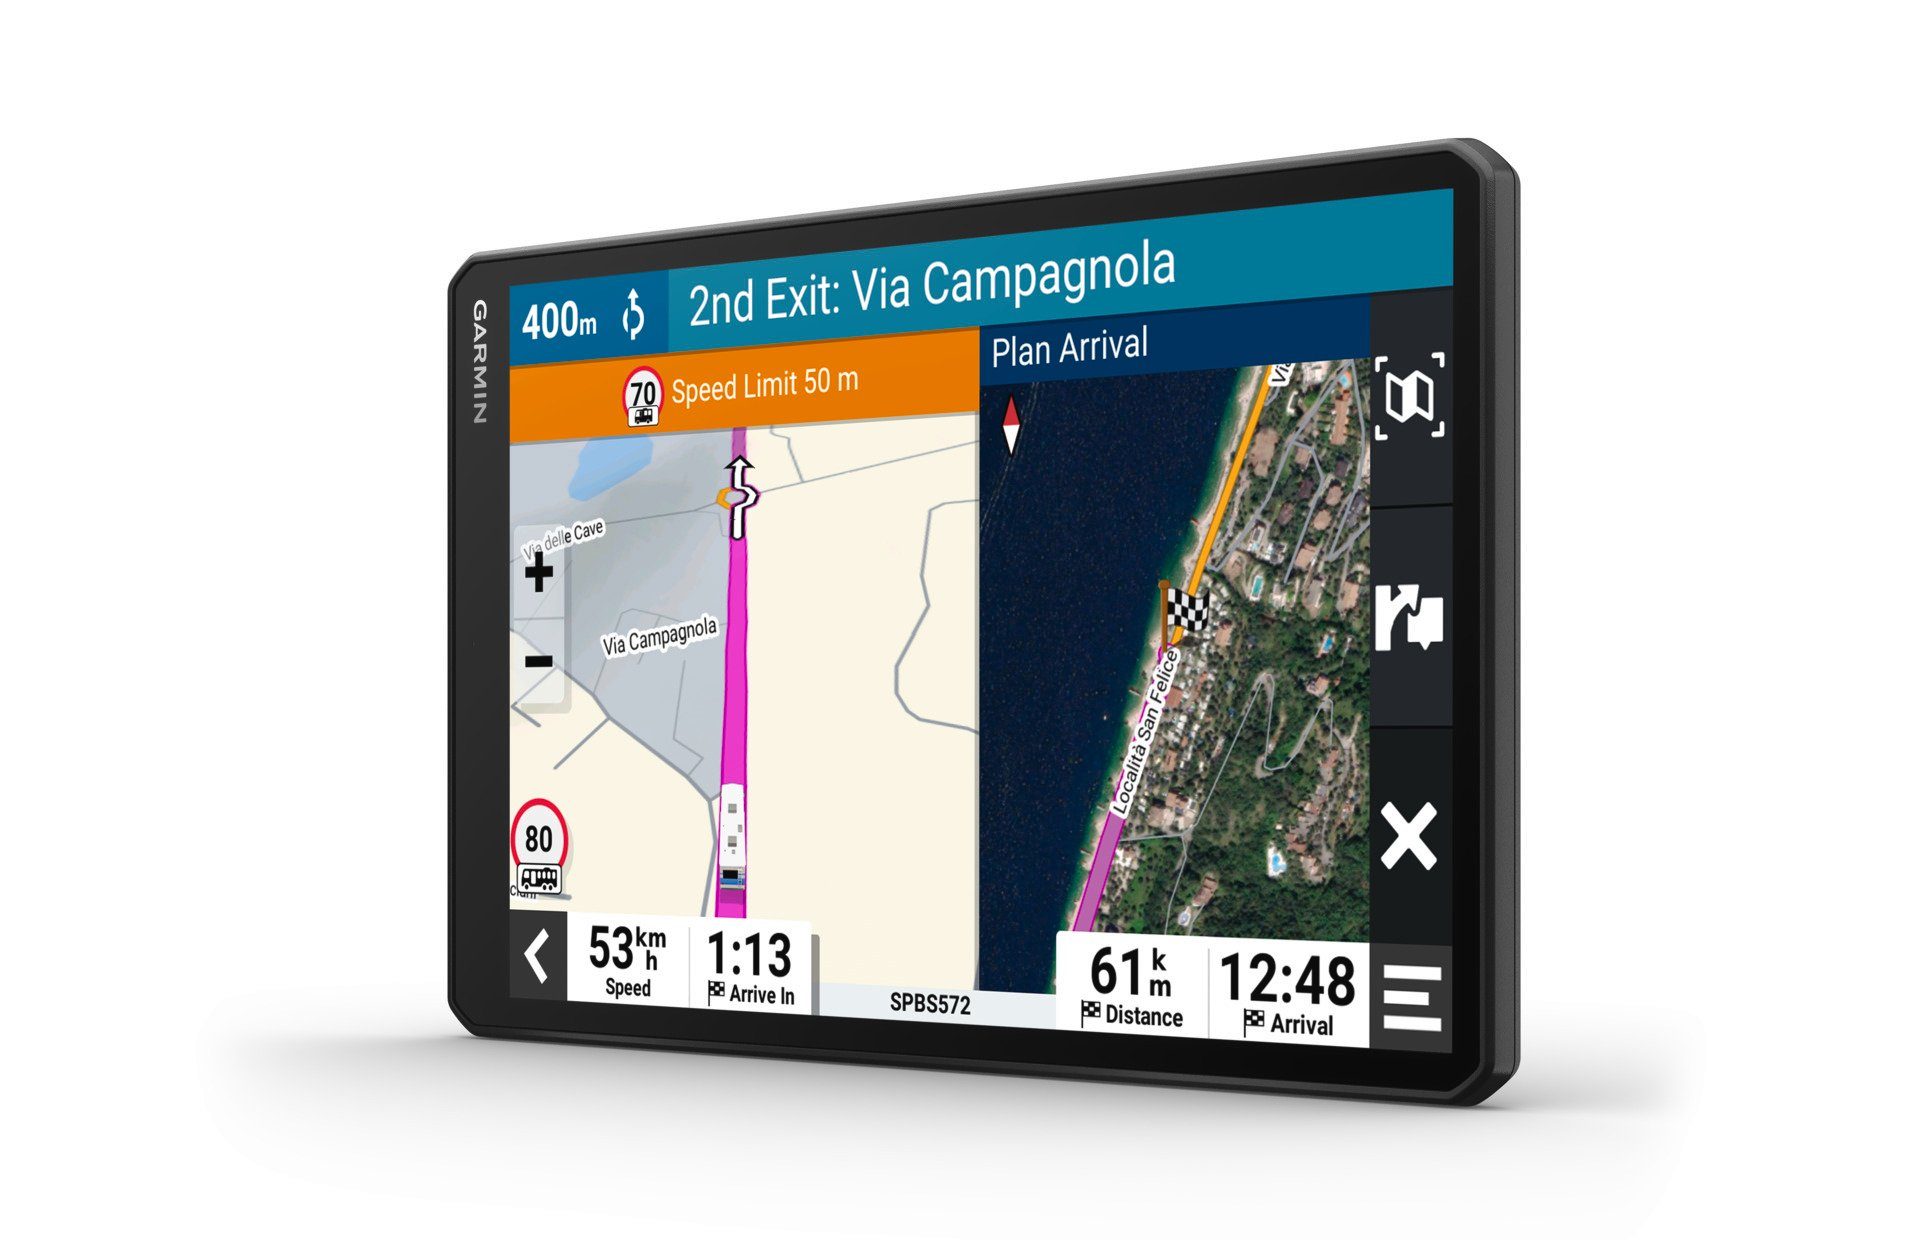 EU, (Europa 1095, Navigationsgerät Karten-Updates, Bluetooth) Camper GPS Länder), (45 Garmin